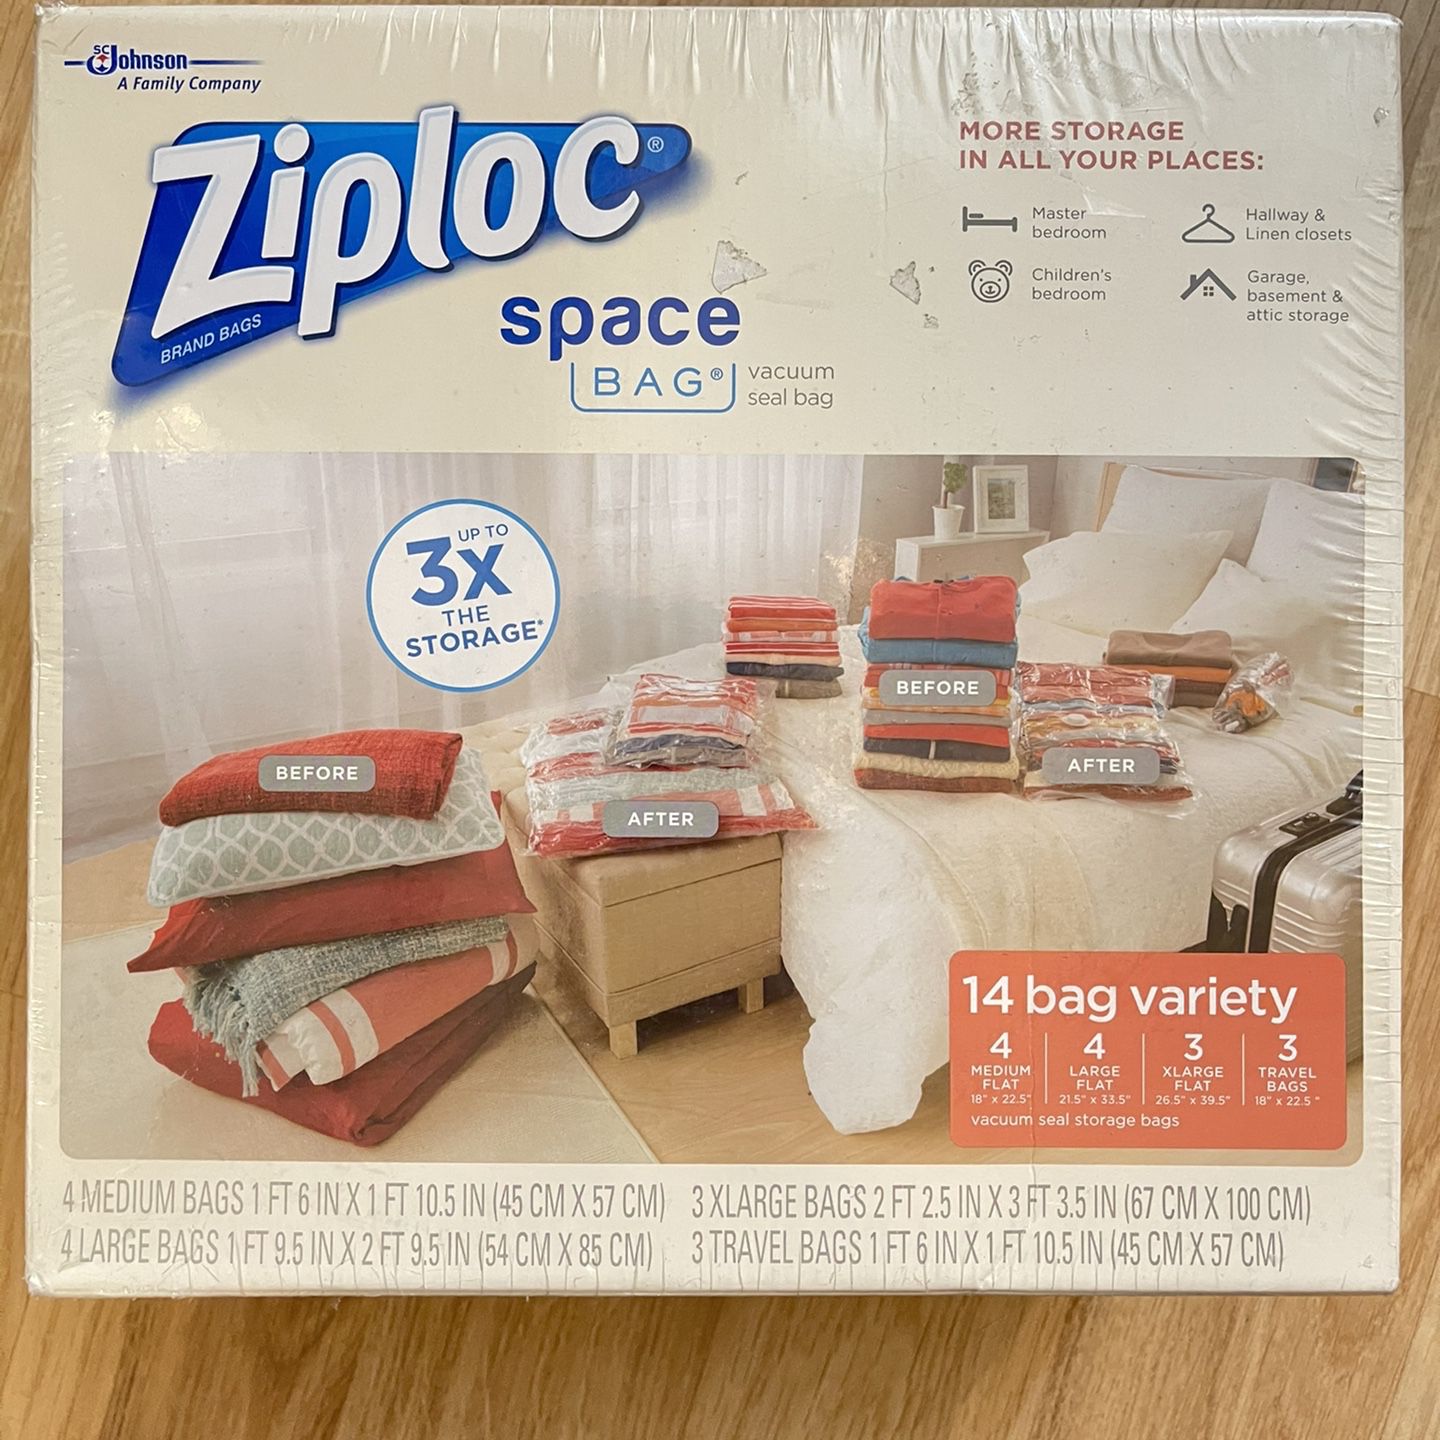 Ziploc Space Bag Vacuum Seal Bag - 14 Bag Variety